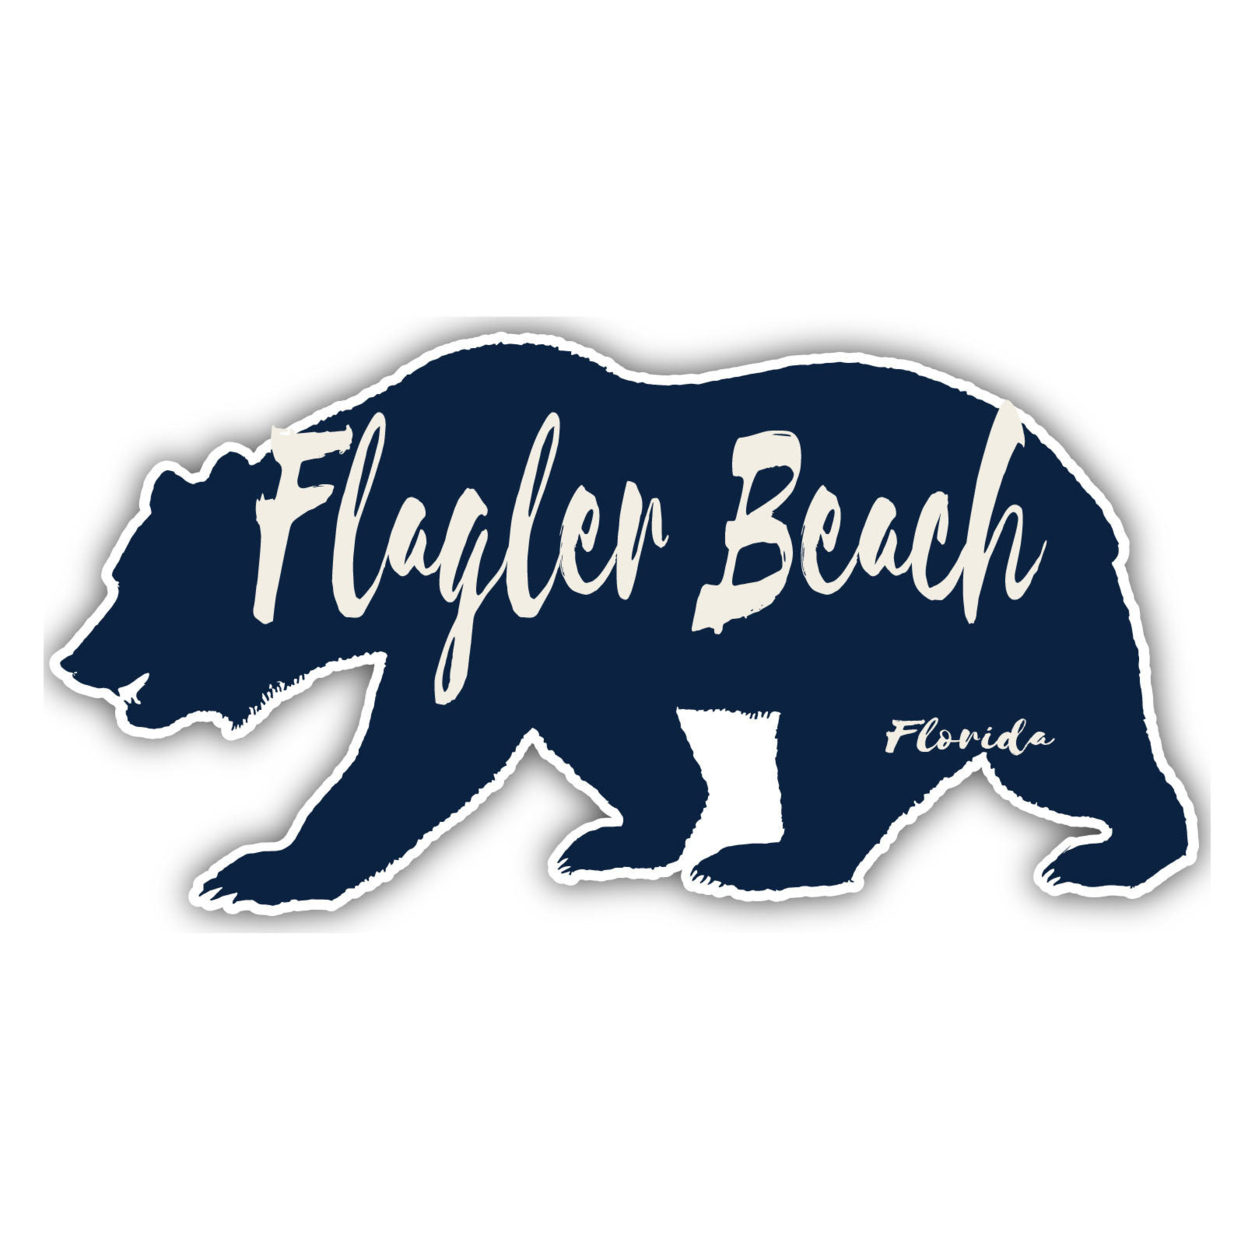 Flagler Beach Florida Souvenir Decorative Stickers (Choose Theme And Size) - Single Unit, 4-Inch, Tent